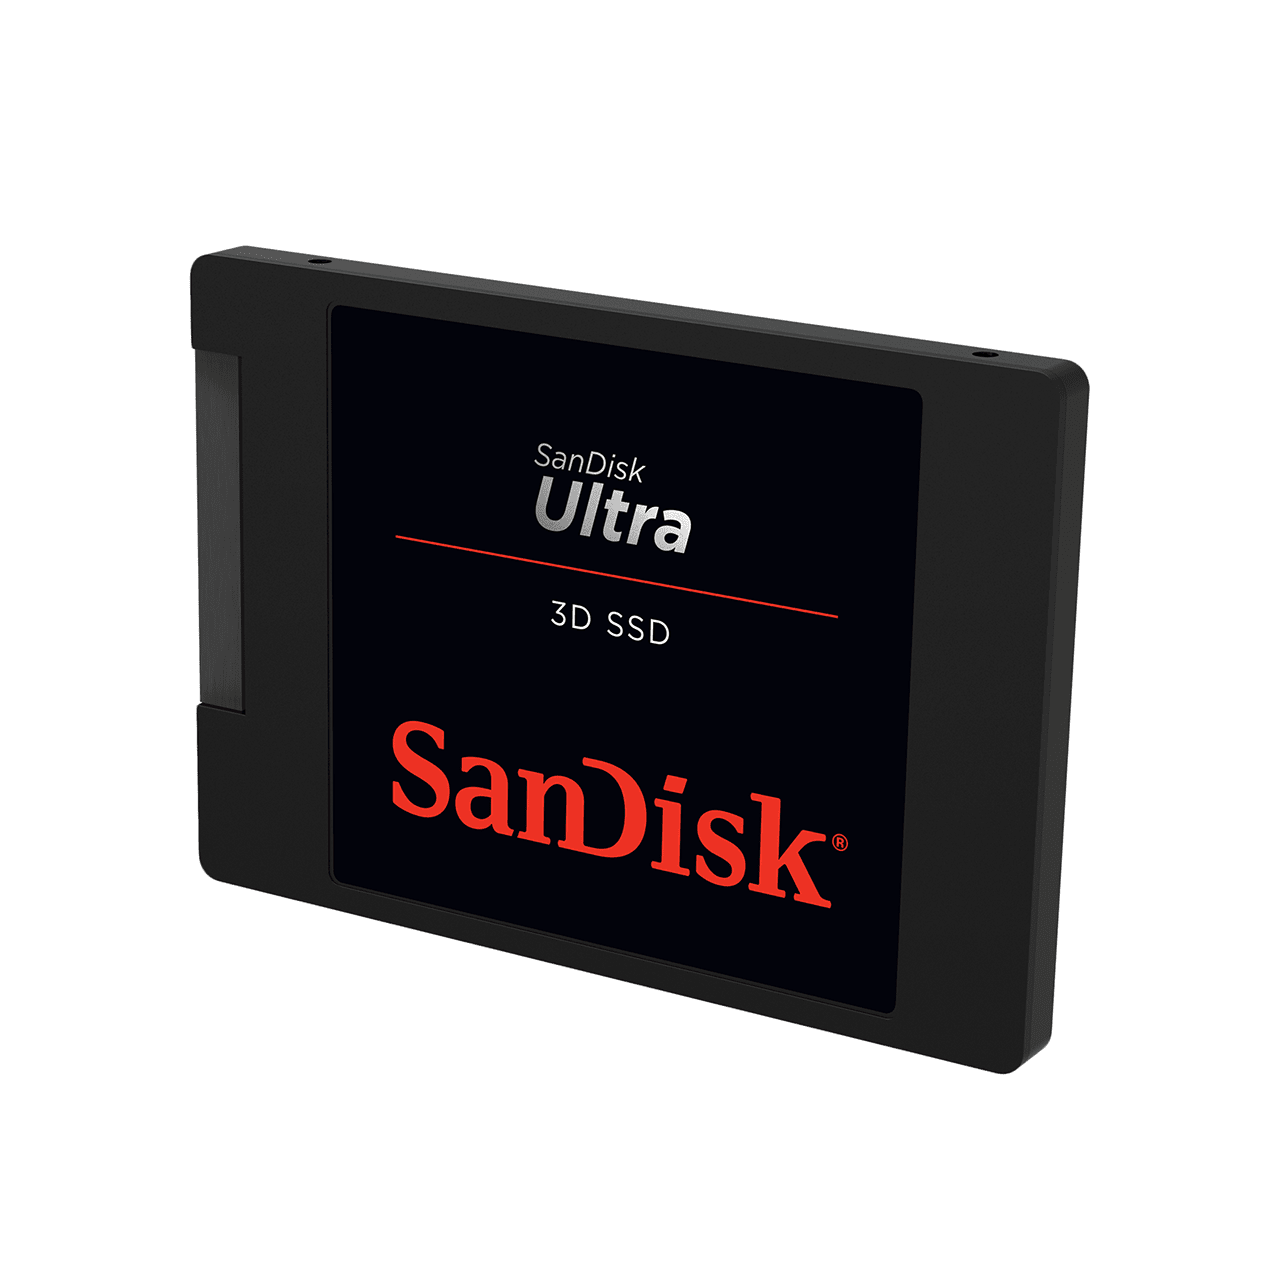 SanDisk Ultra 3D SSD, 2.5-Inch, 